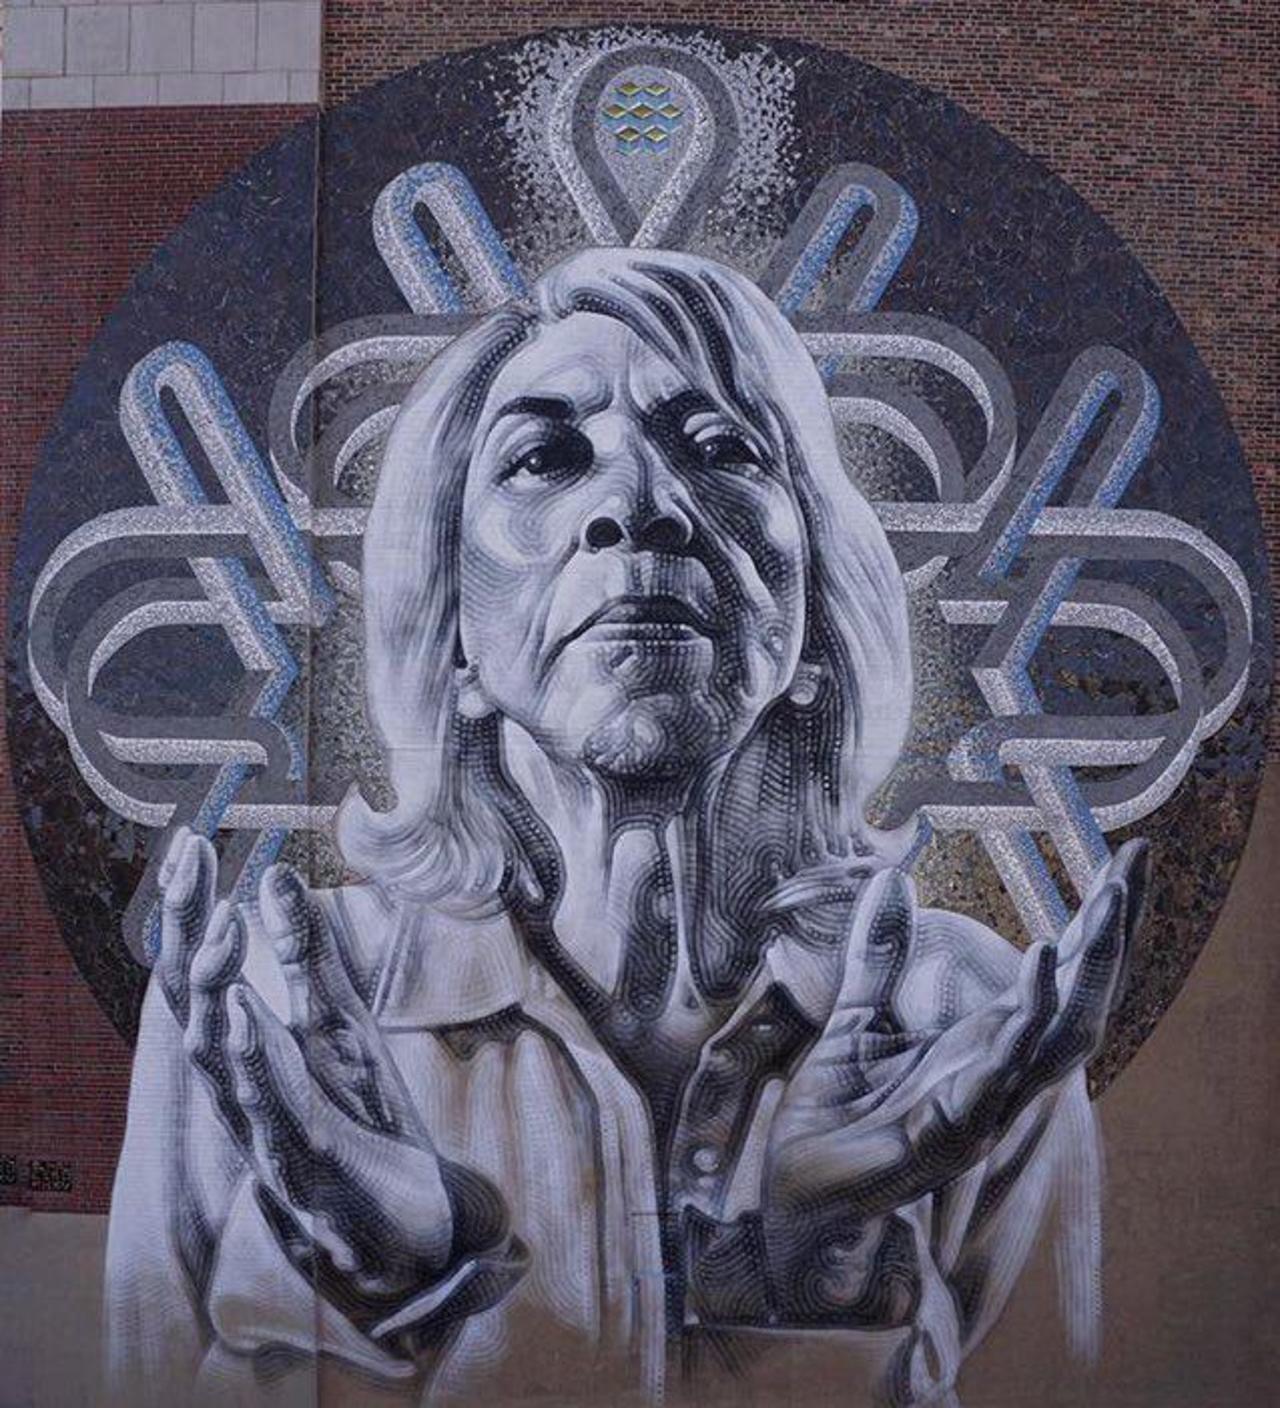 RT @buzz_sandyltn: New Street Art by El Mac 

#art #graffiti #mural #streetart https://t.co/0aukaLyy0S